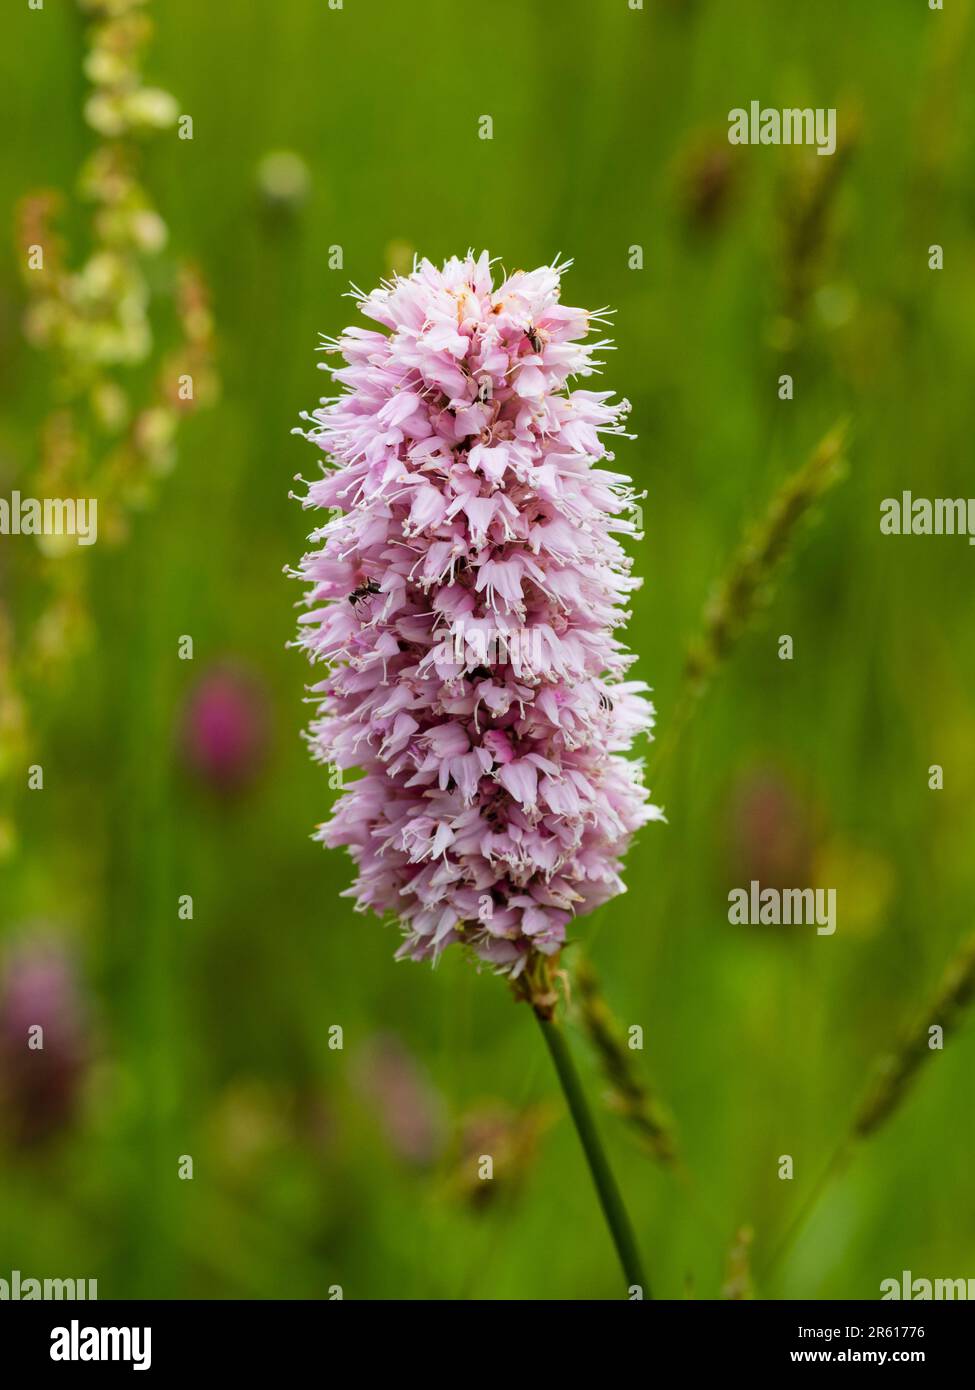 Single flowerr of the pale pink common bistort perennial, Persicaria bistorta 'Superba' Stock Photo